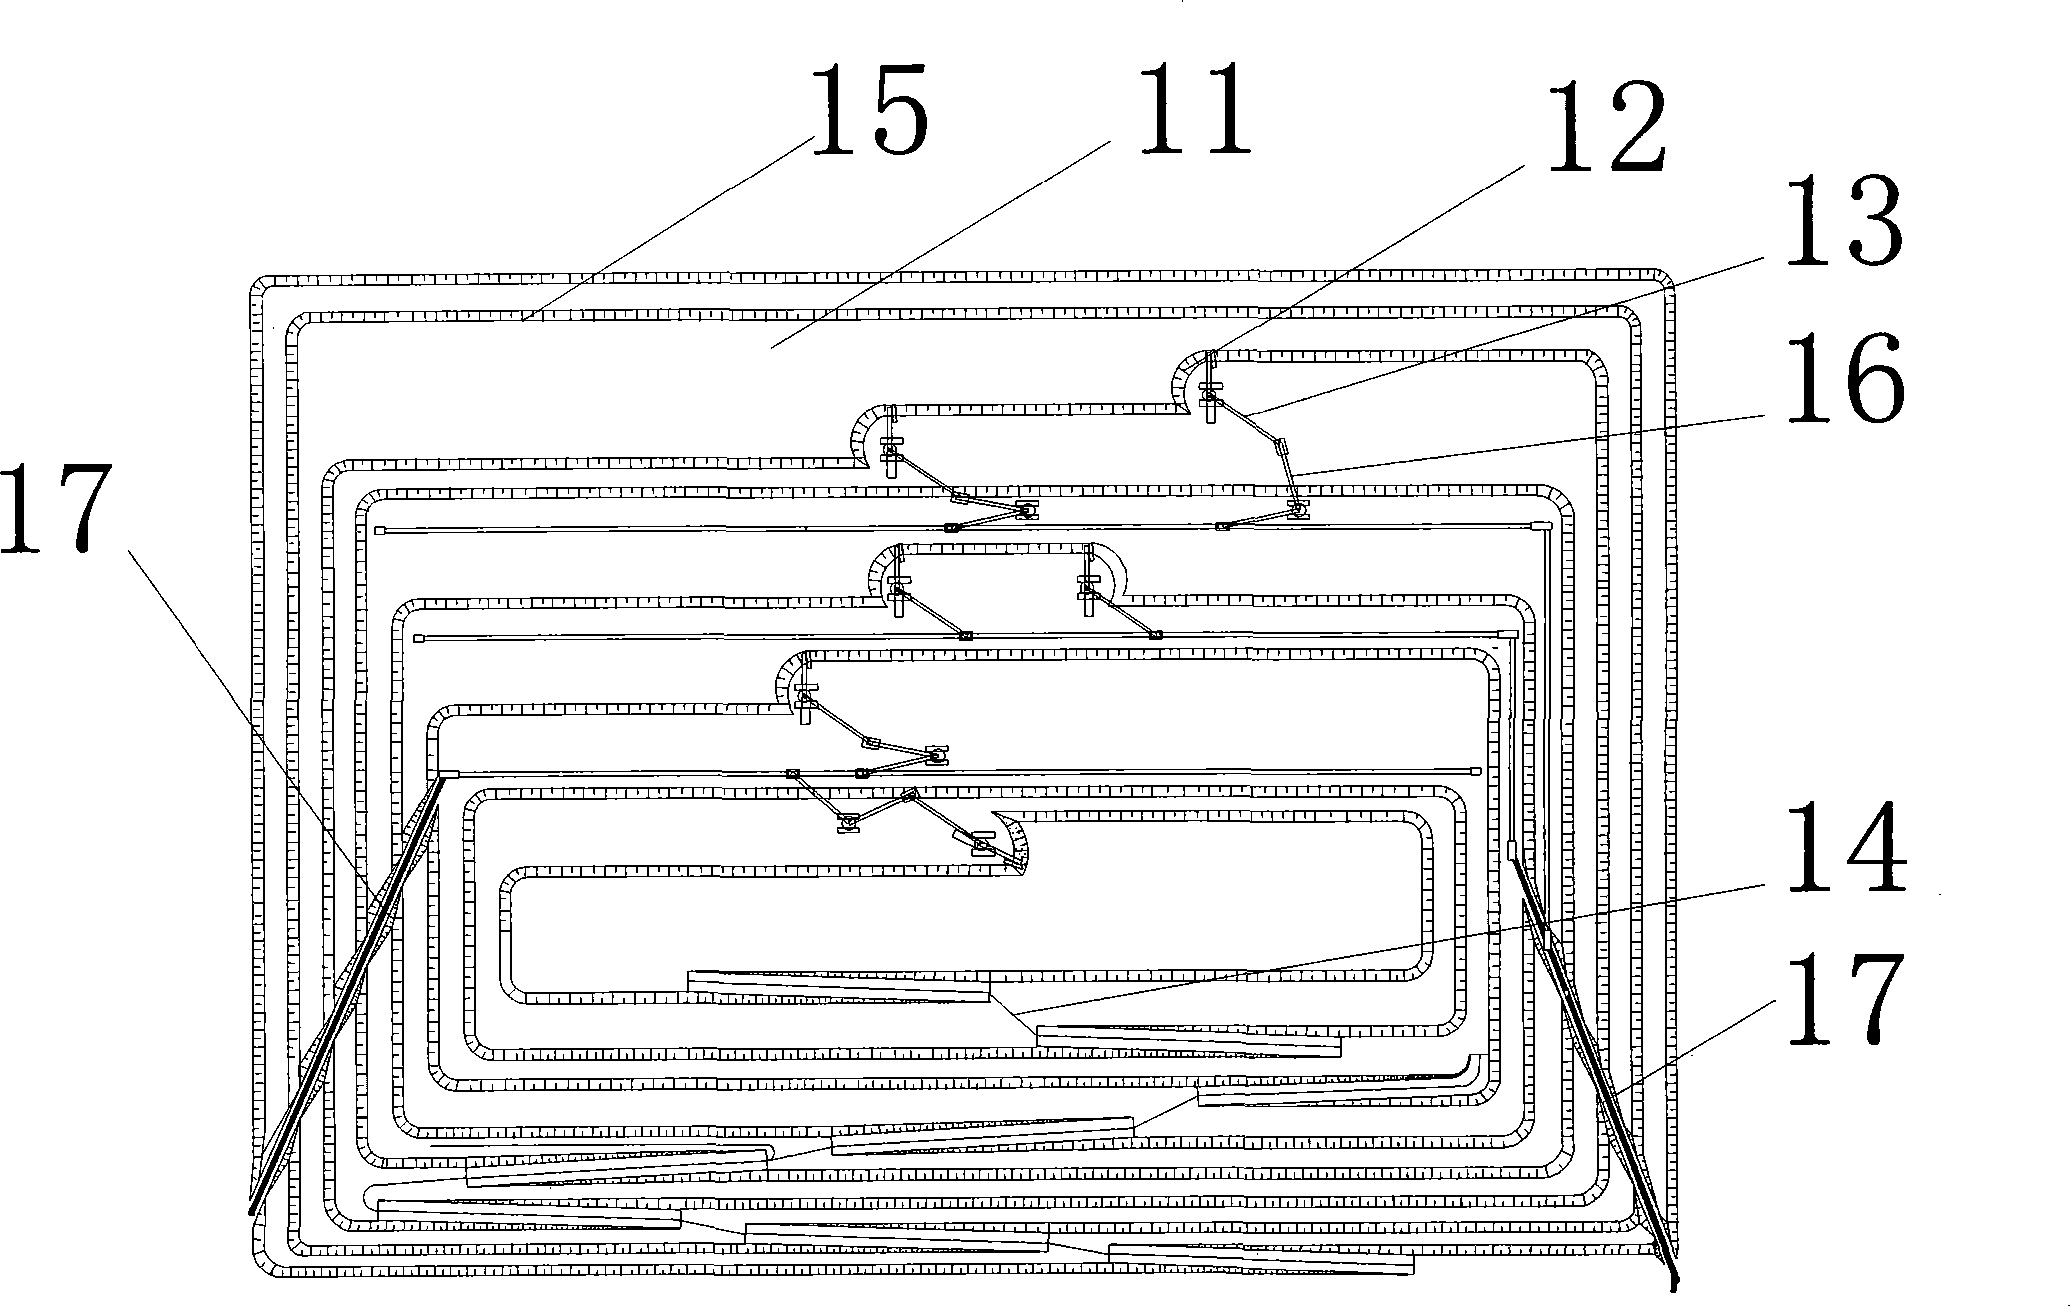 Deep-concave strip mine production model system